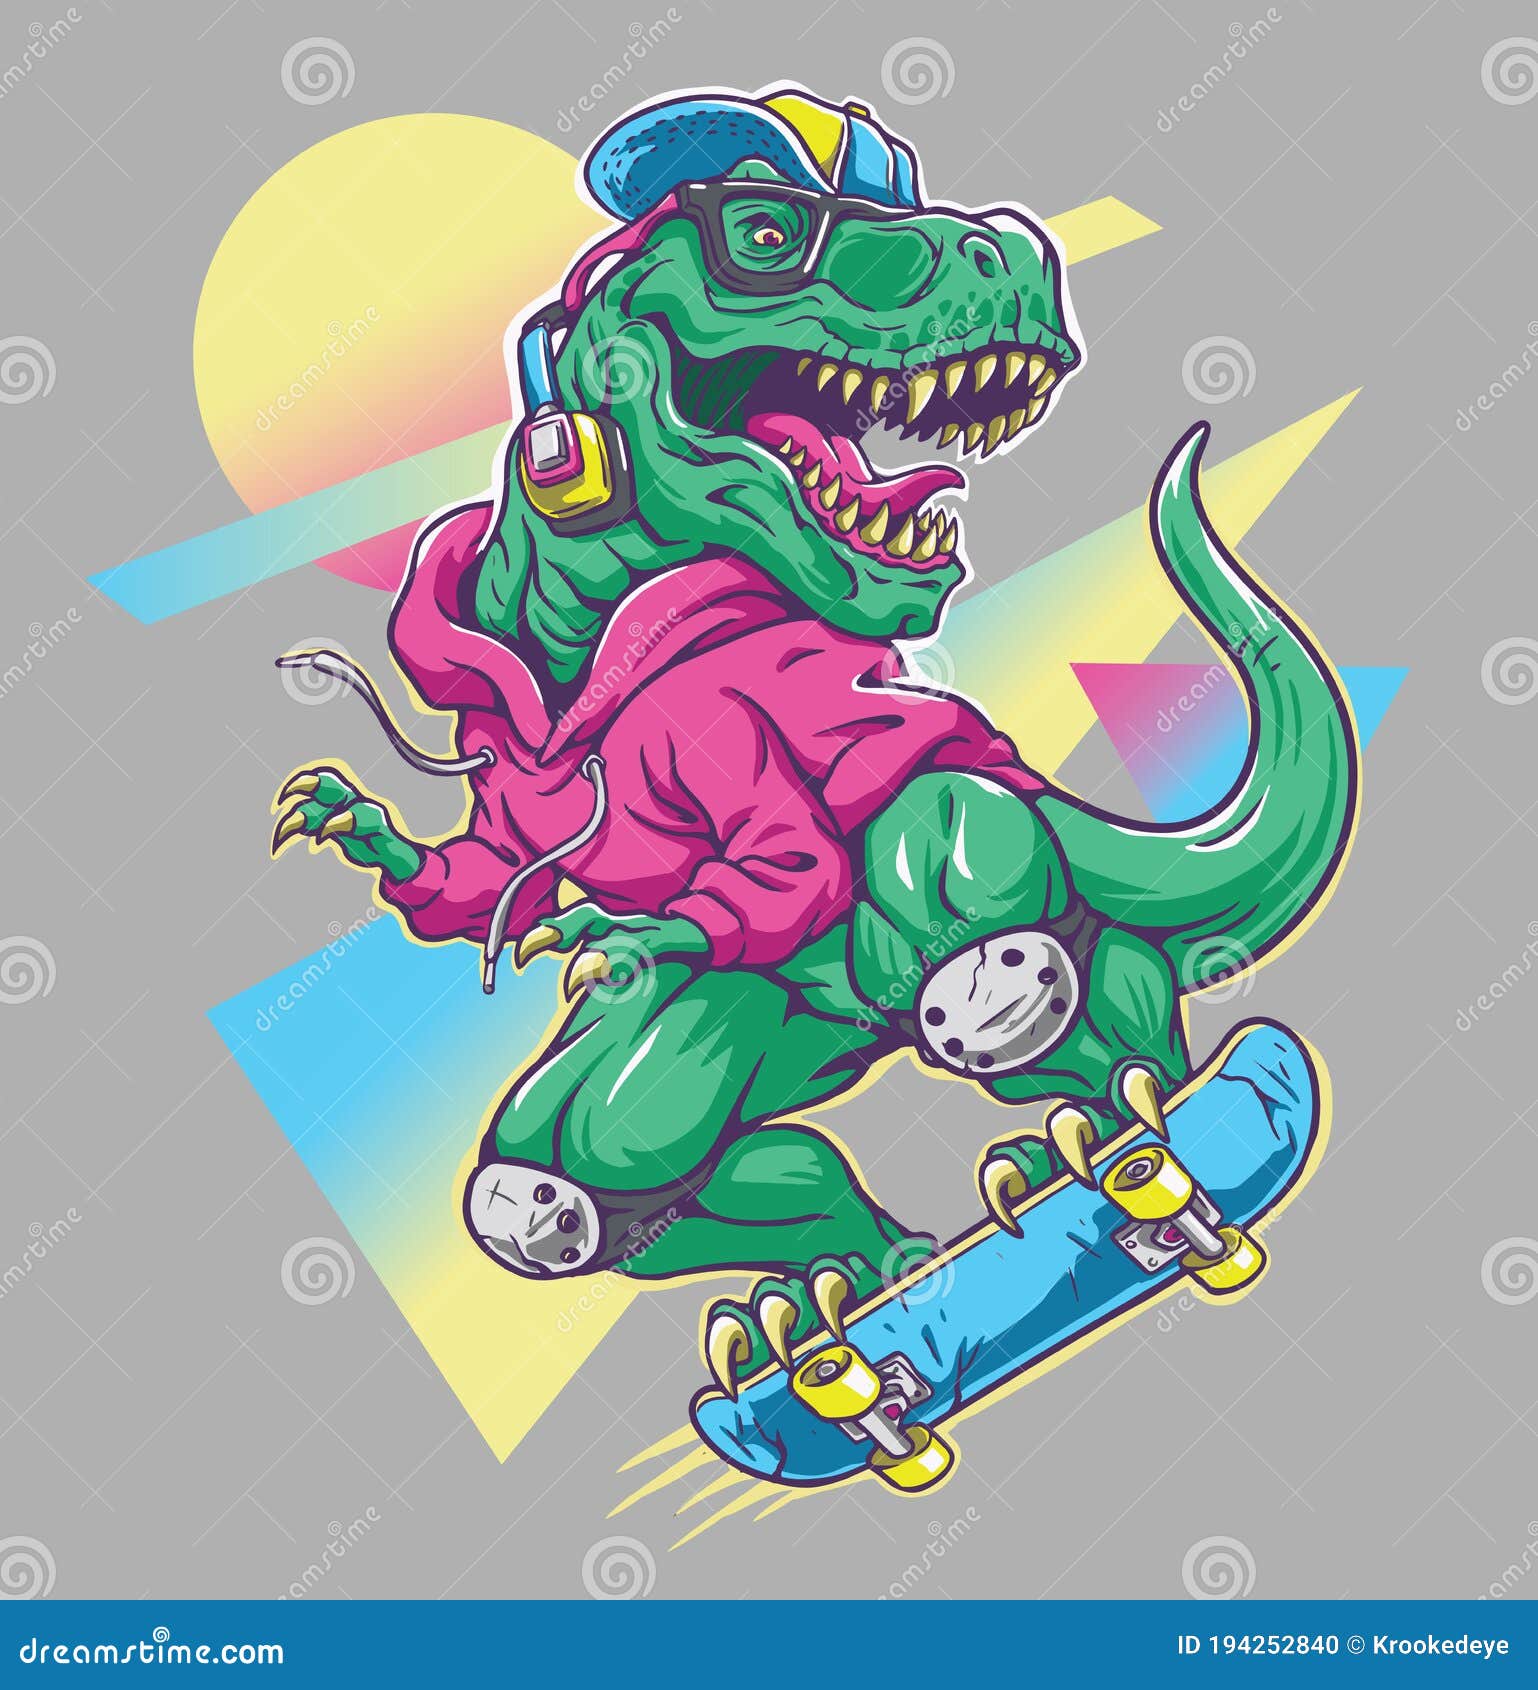 humorous t rex dinosaur riding on skateboard. cool 80Ã¢â¬â¢s  style.